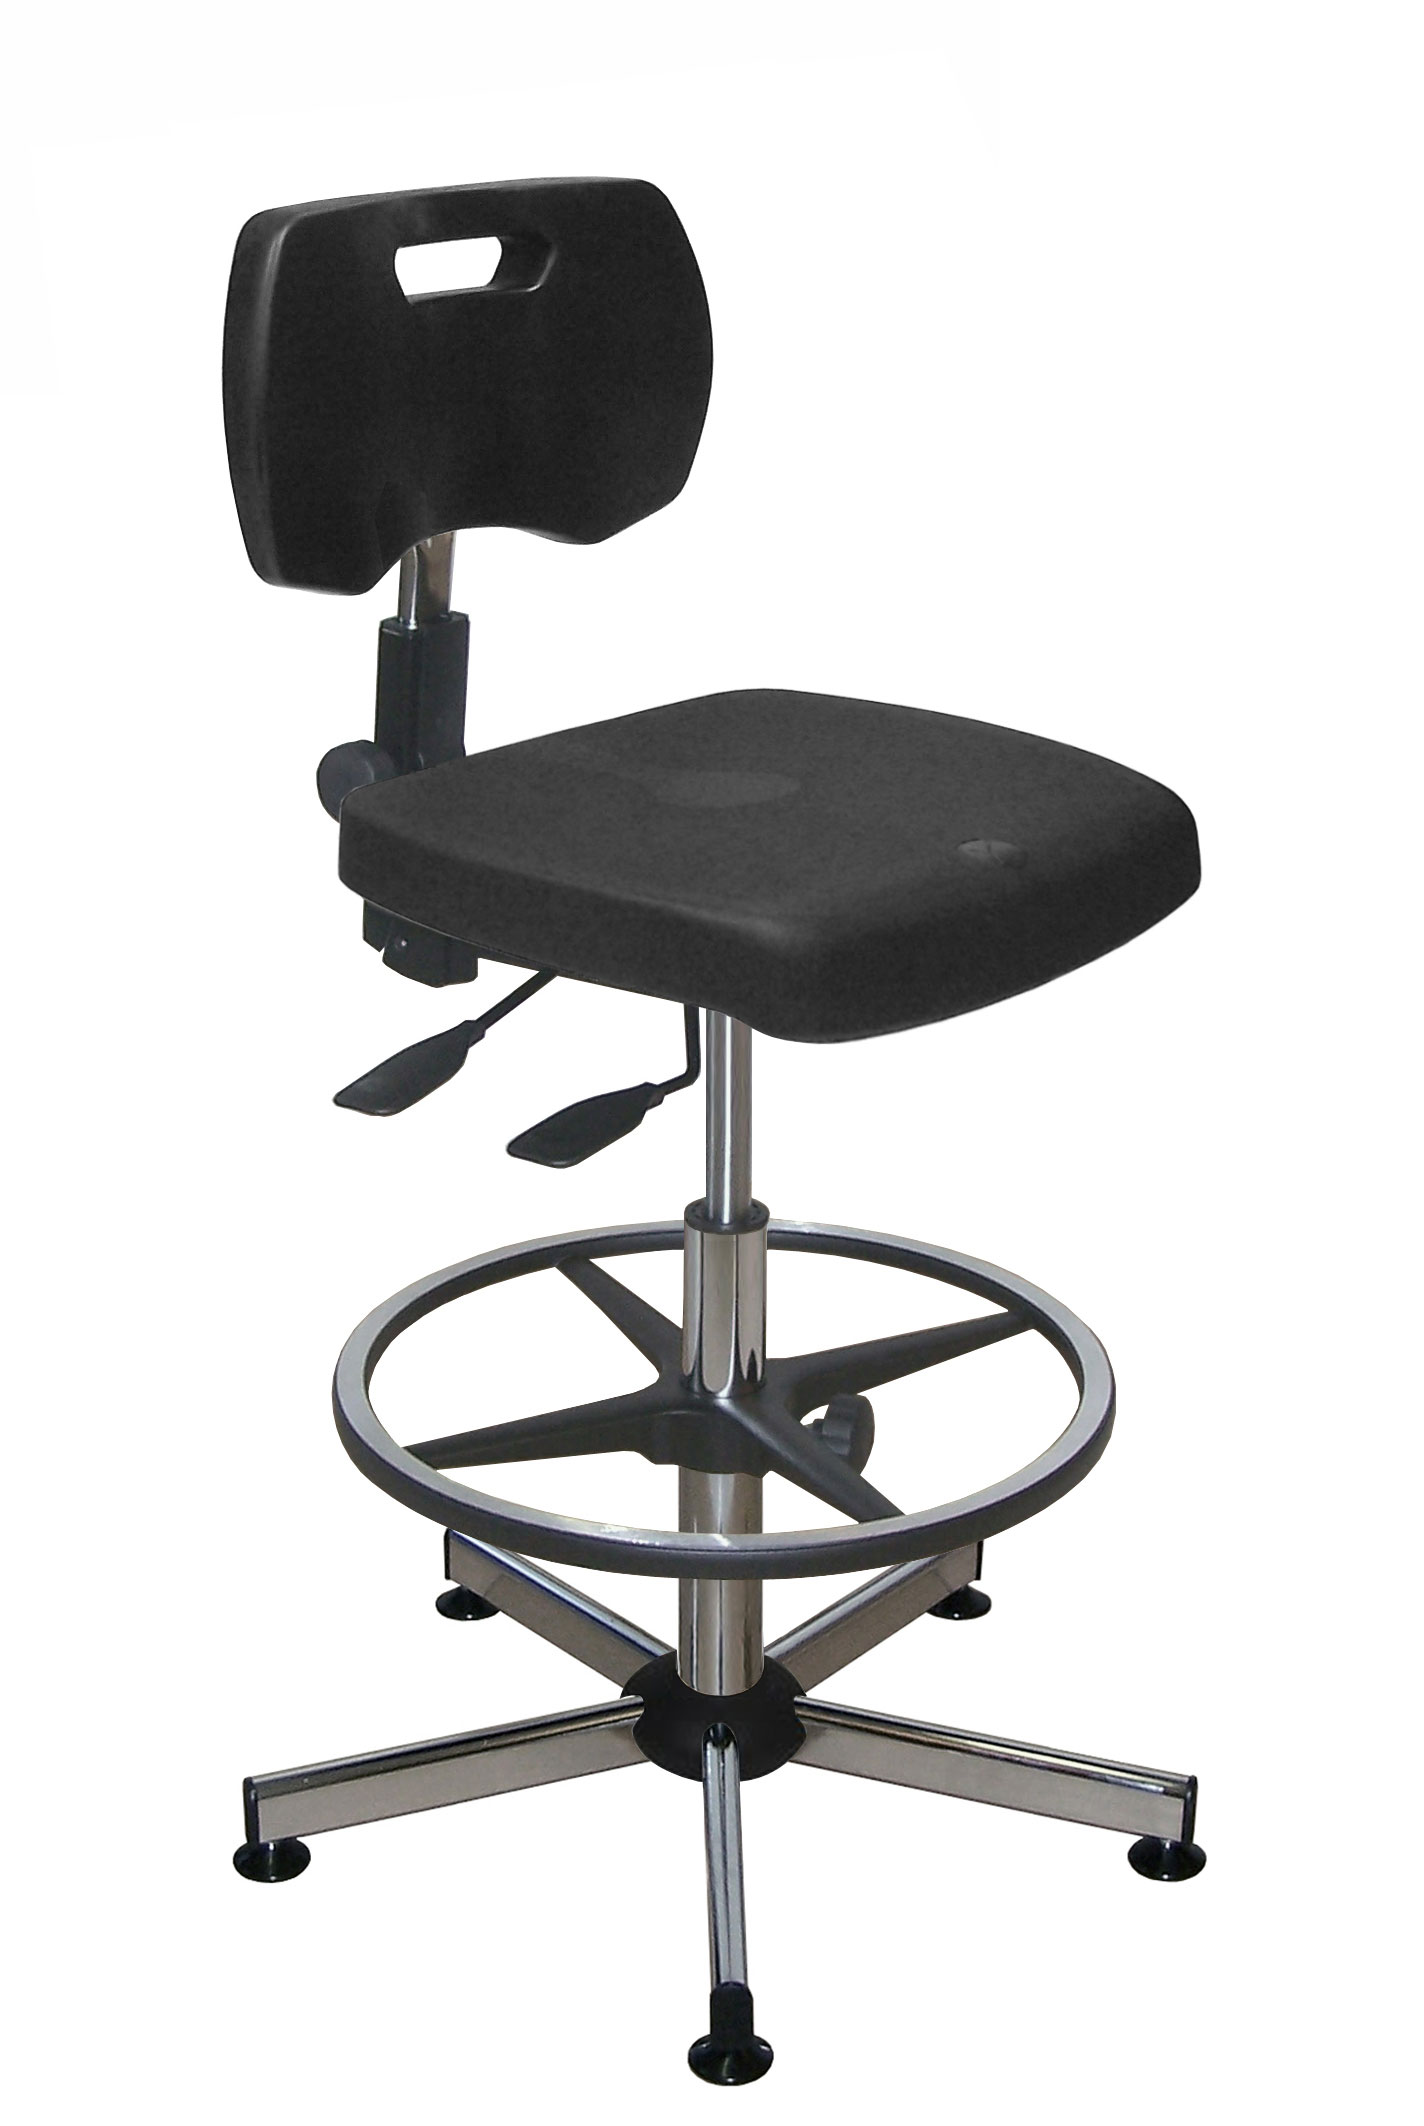 Ergonomic laboratory chairs and stools